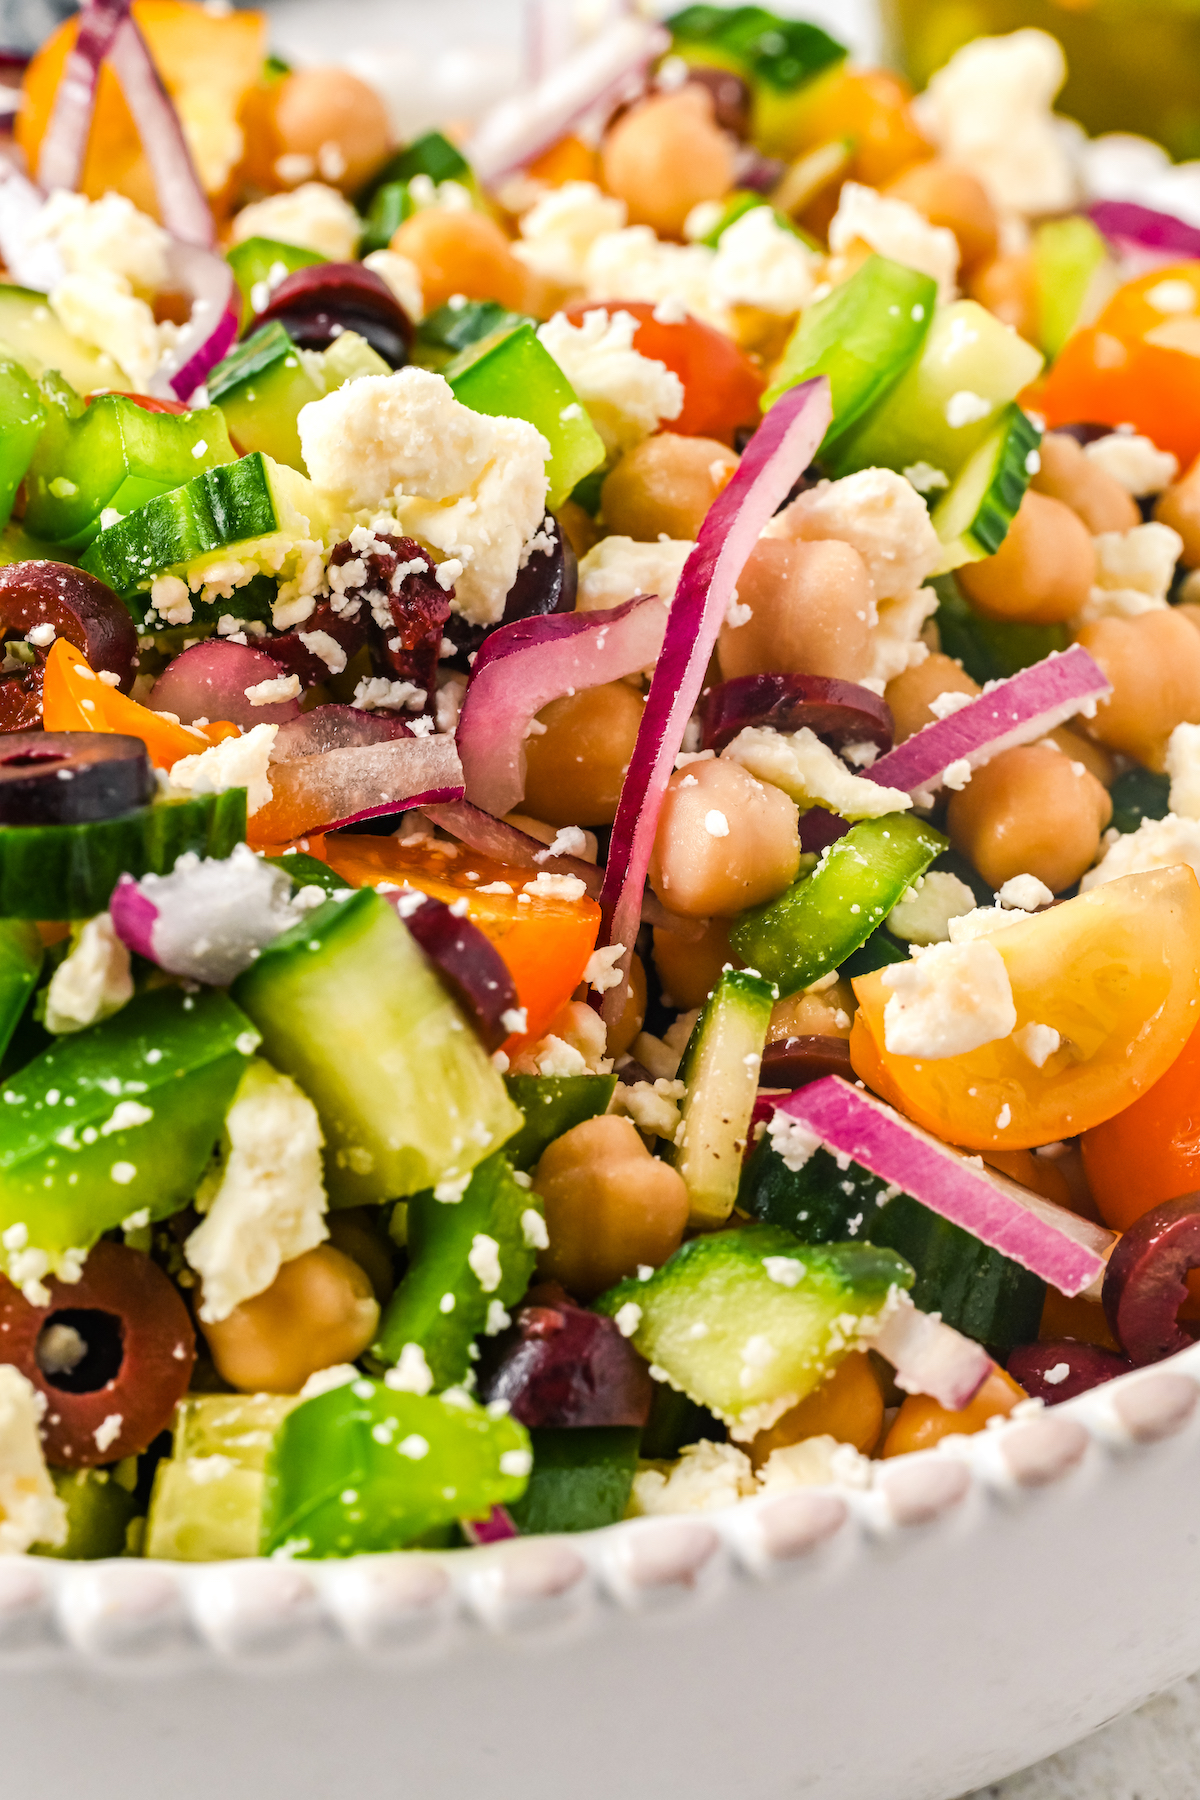 Close-up shot of vinaigrette-dressed salad with chickpeas.